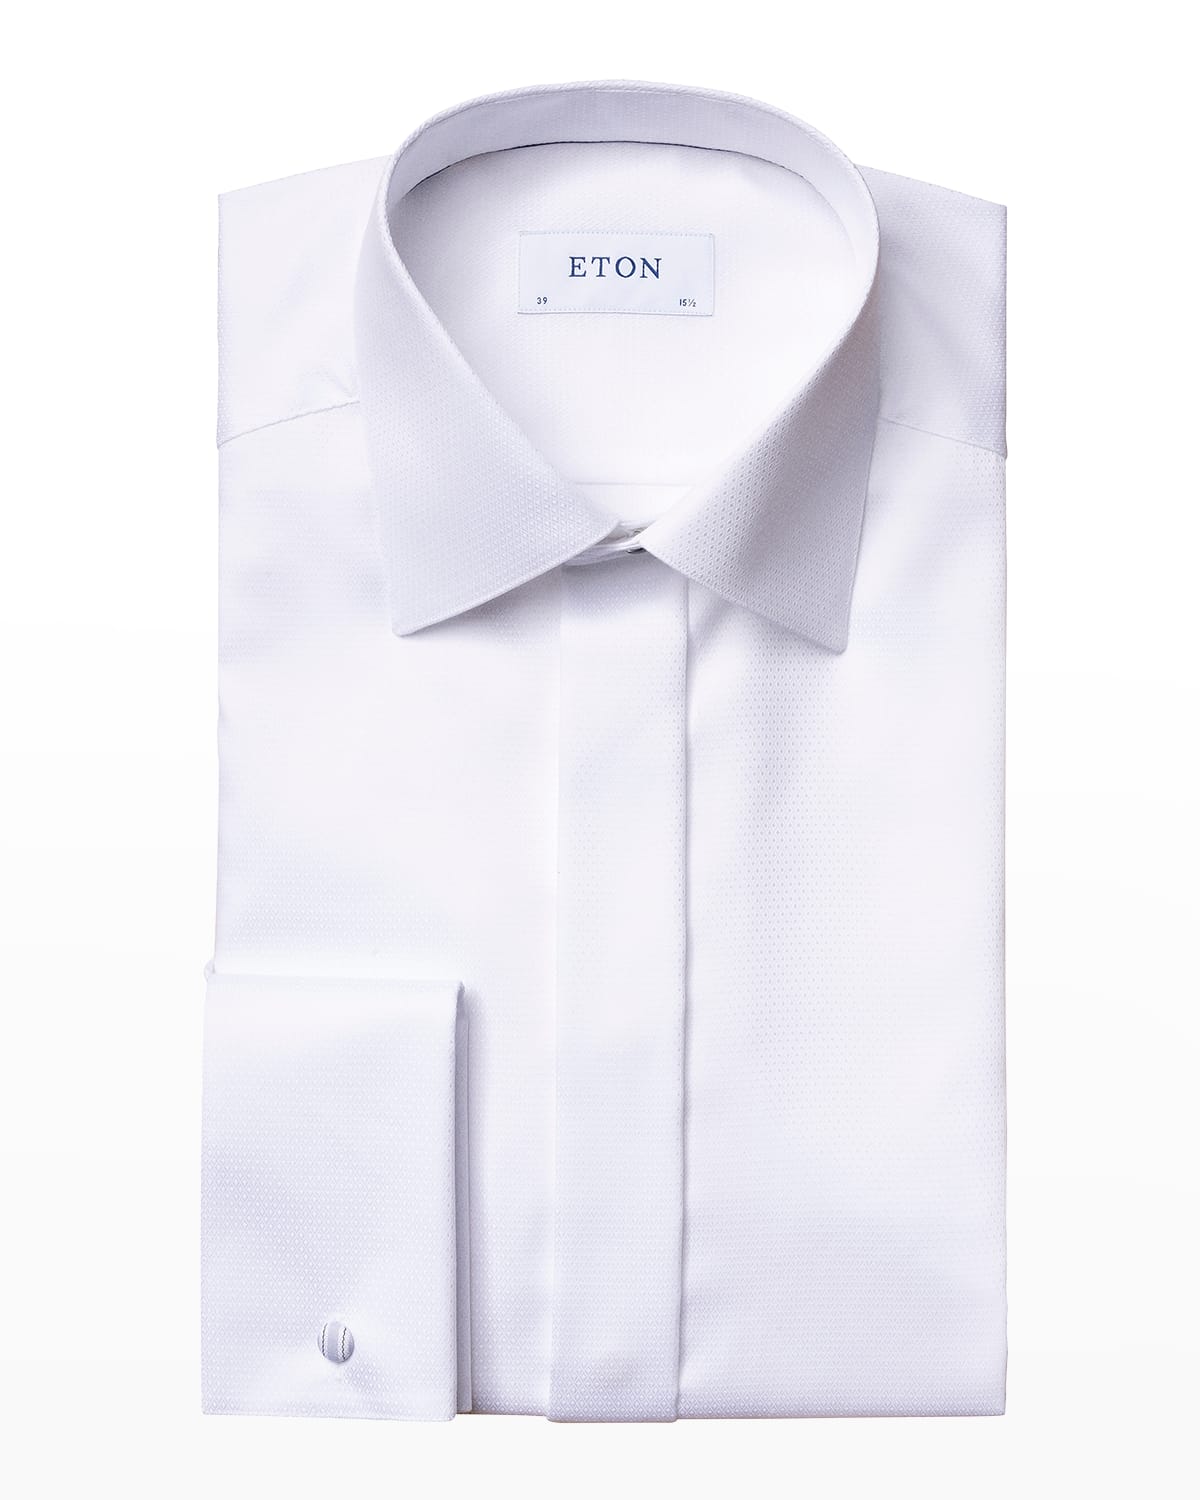 Eton Men's Diamond-Weave Dress Shirt